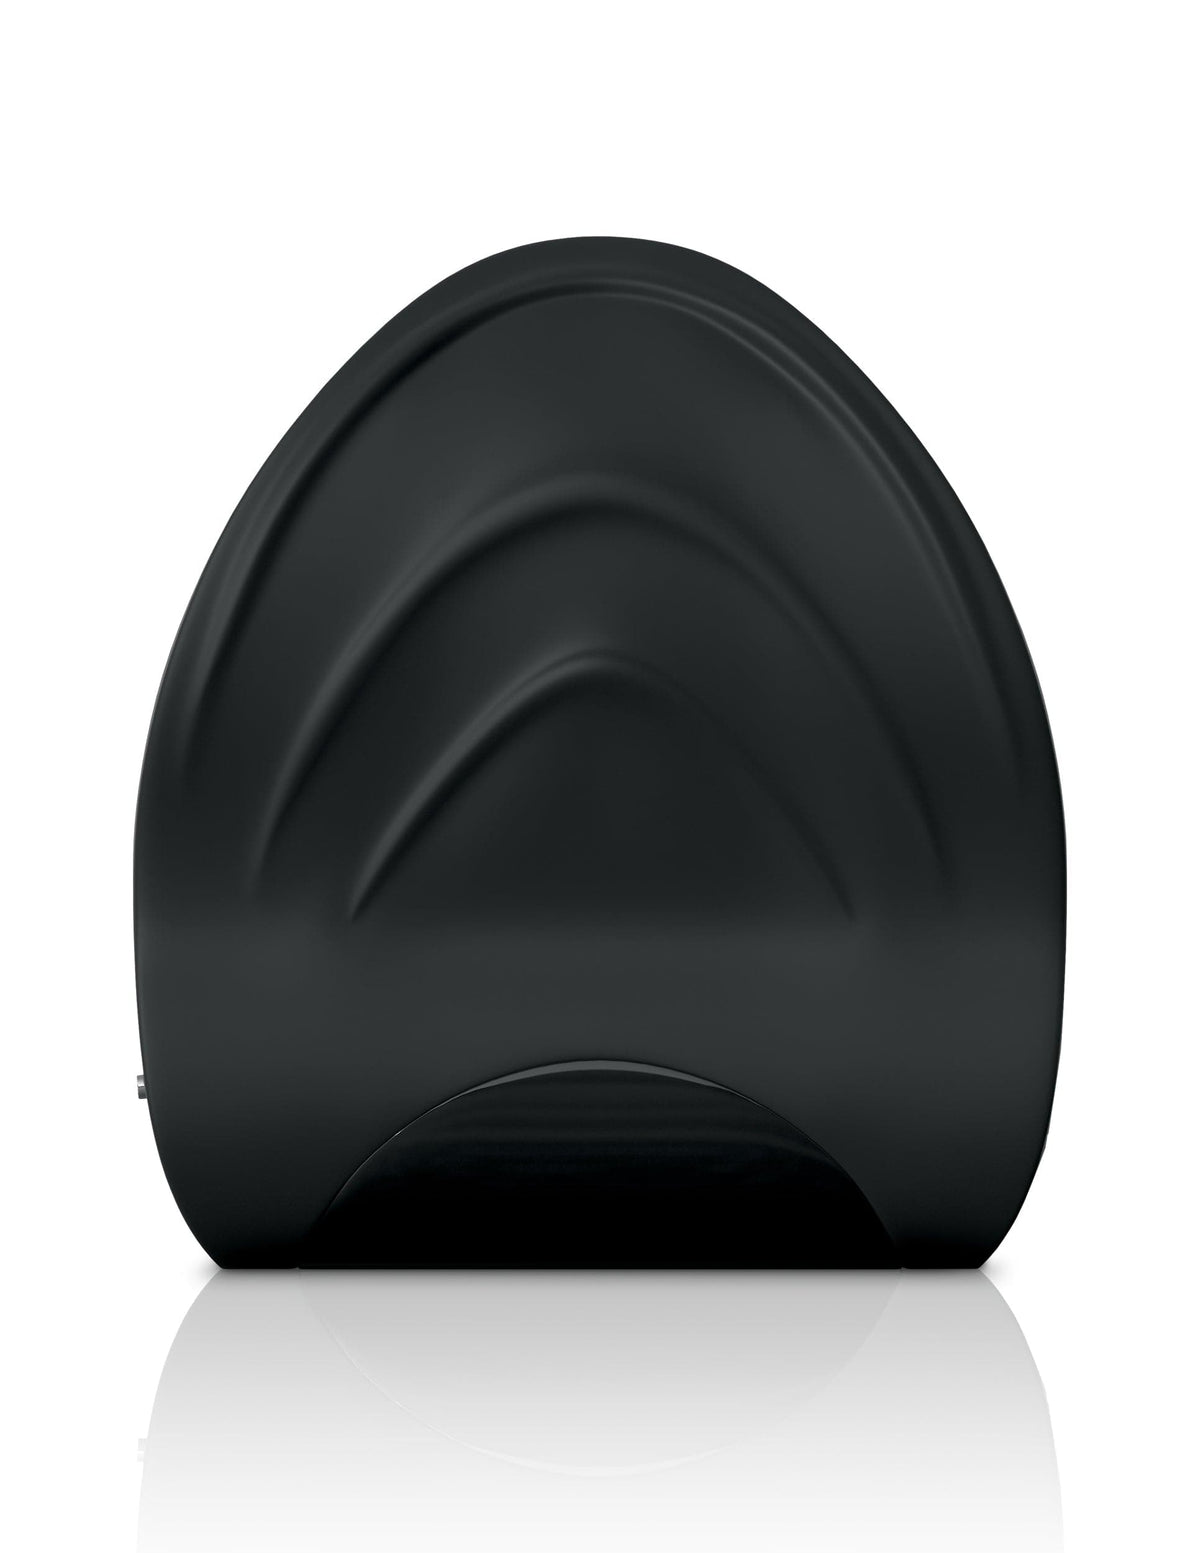 vibrating silicone edger trainer black